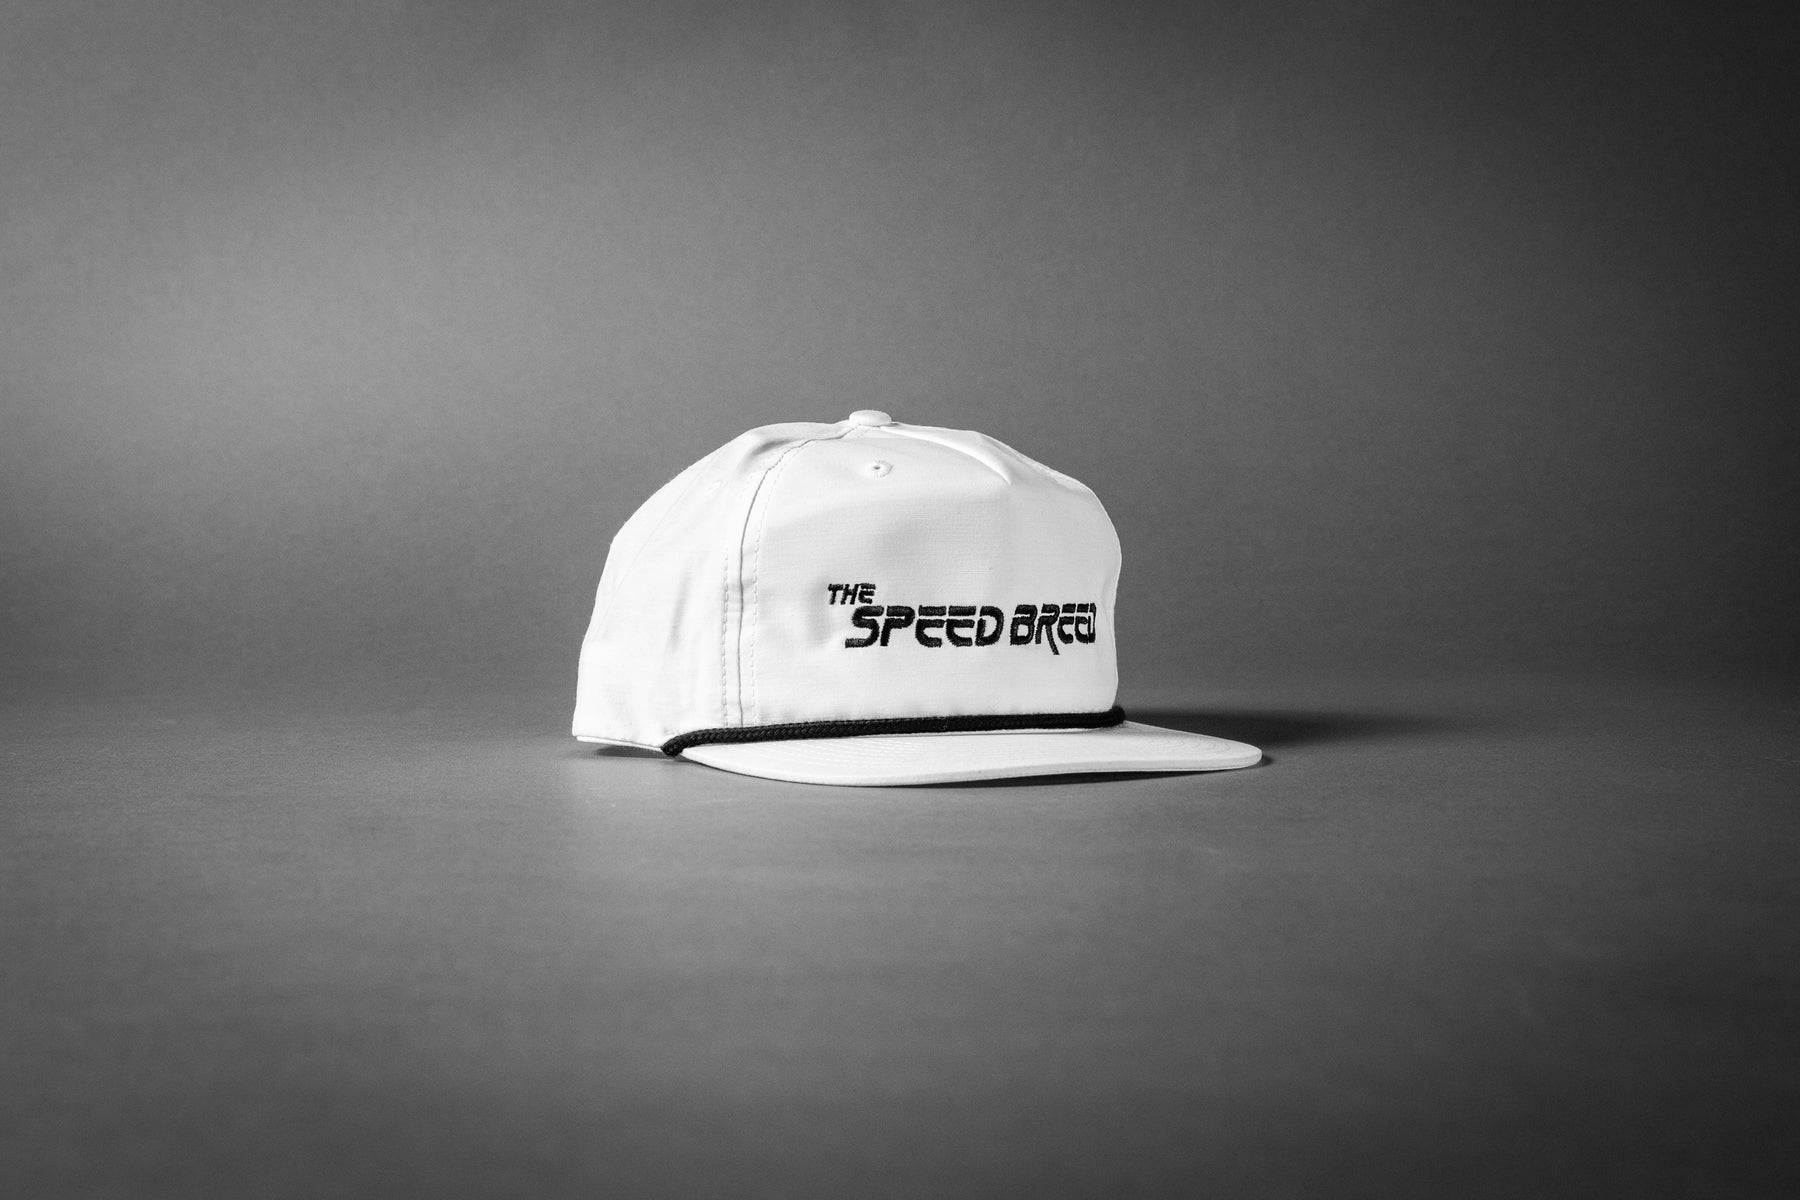 SPENCER (White/Black Speed Breed Grandpa Hat)